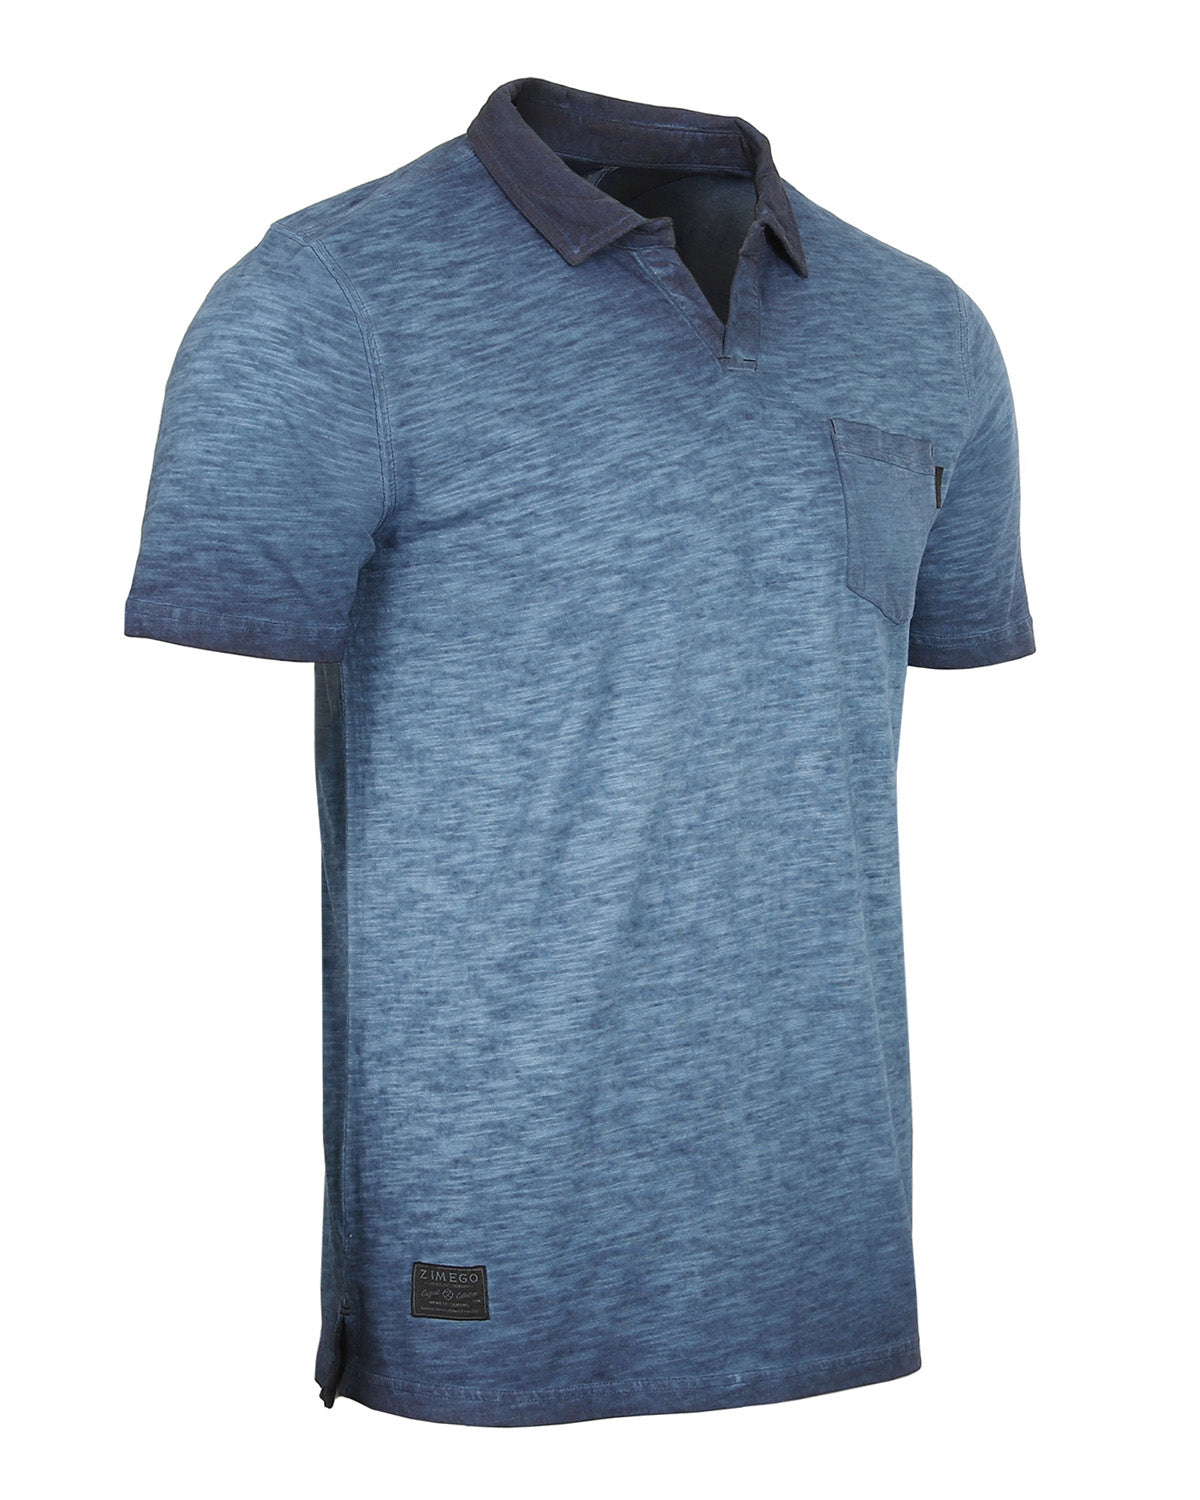 ZIMEGO Mens Polo Shirt Short Sleeve Vintage Wash Fade Dyed Casual V-Neck Henley-7